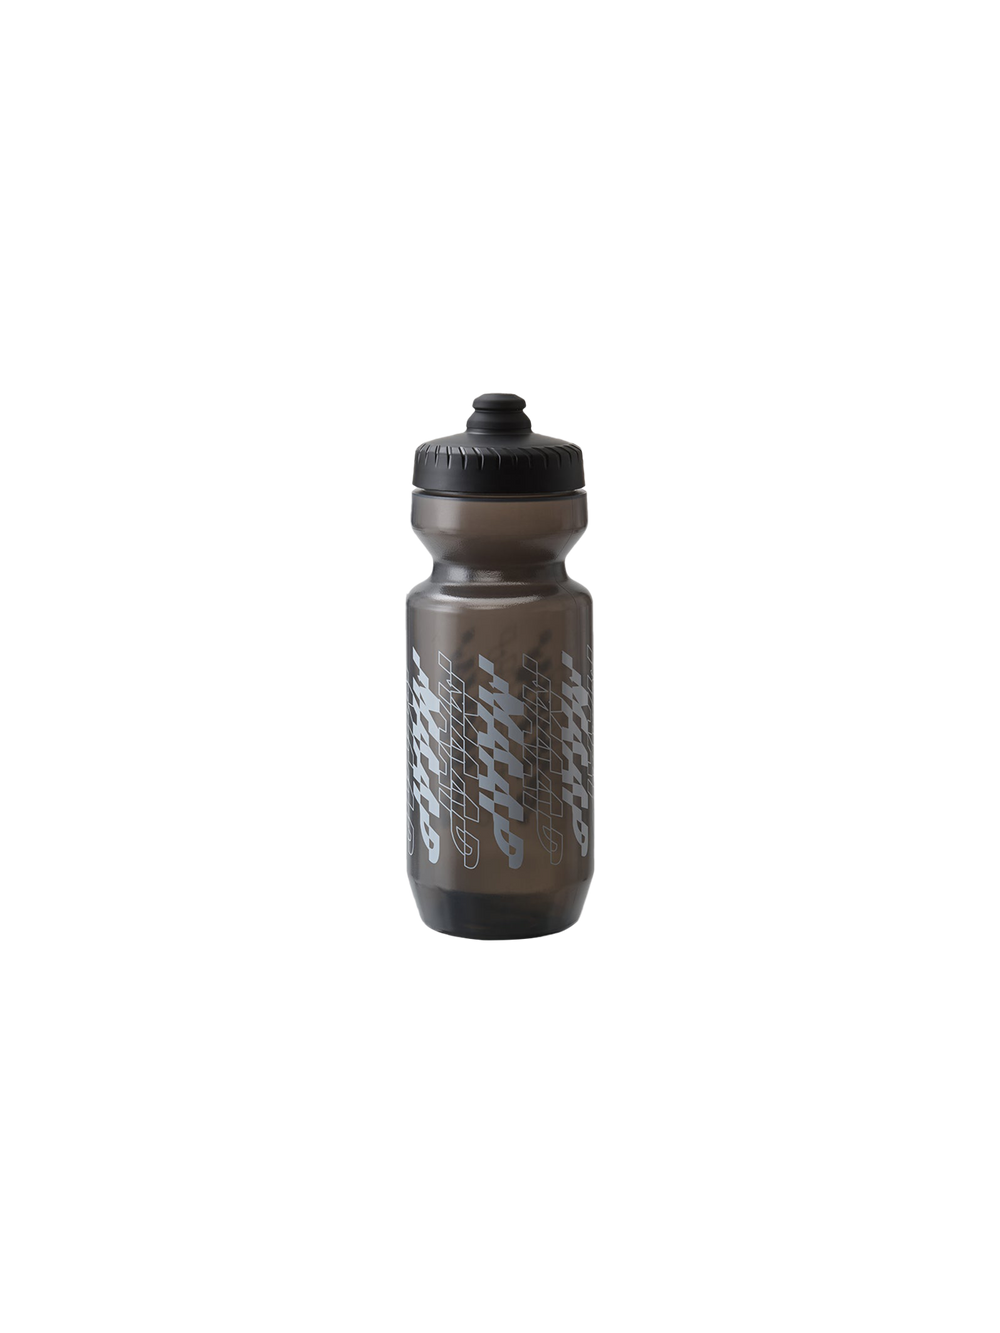 Product Image for Fragment Bottle